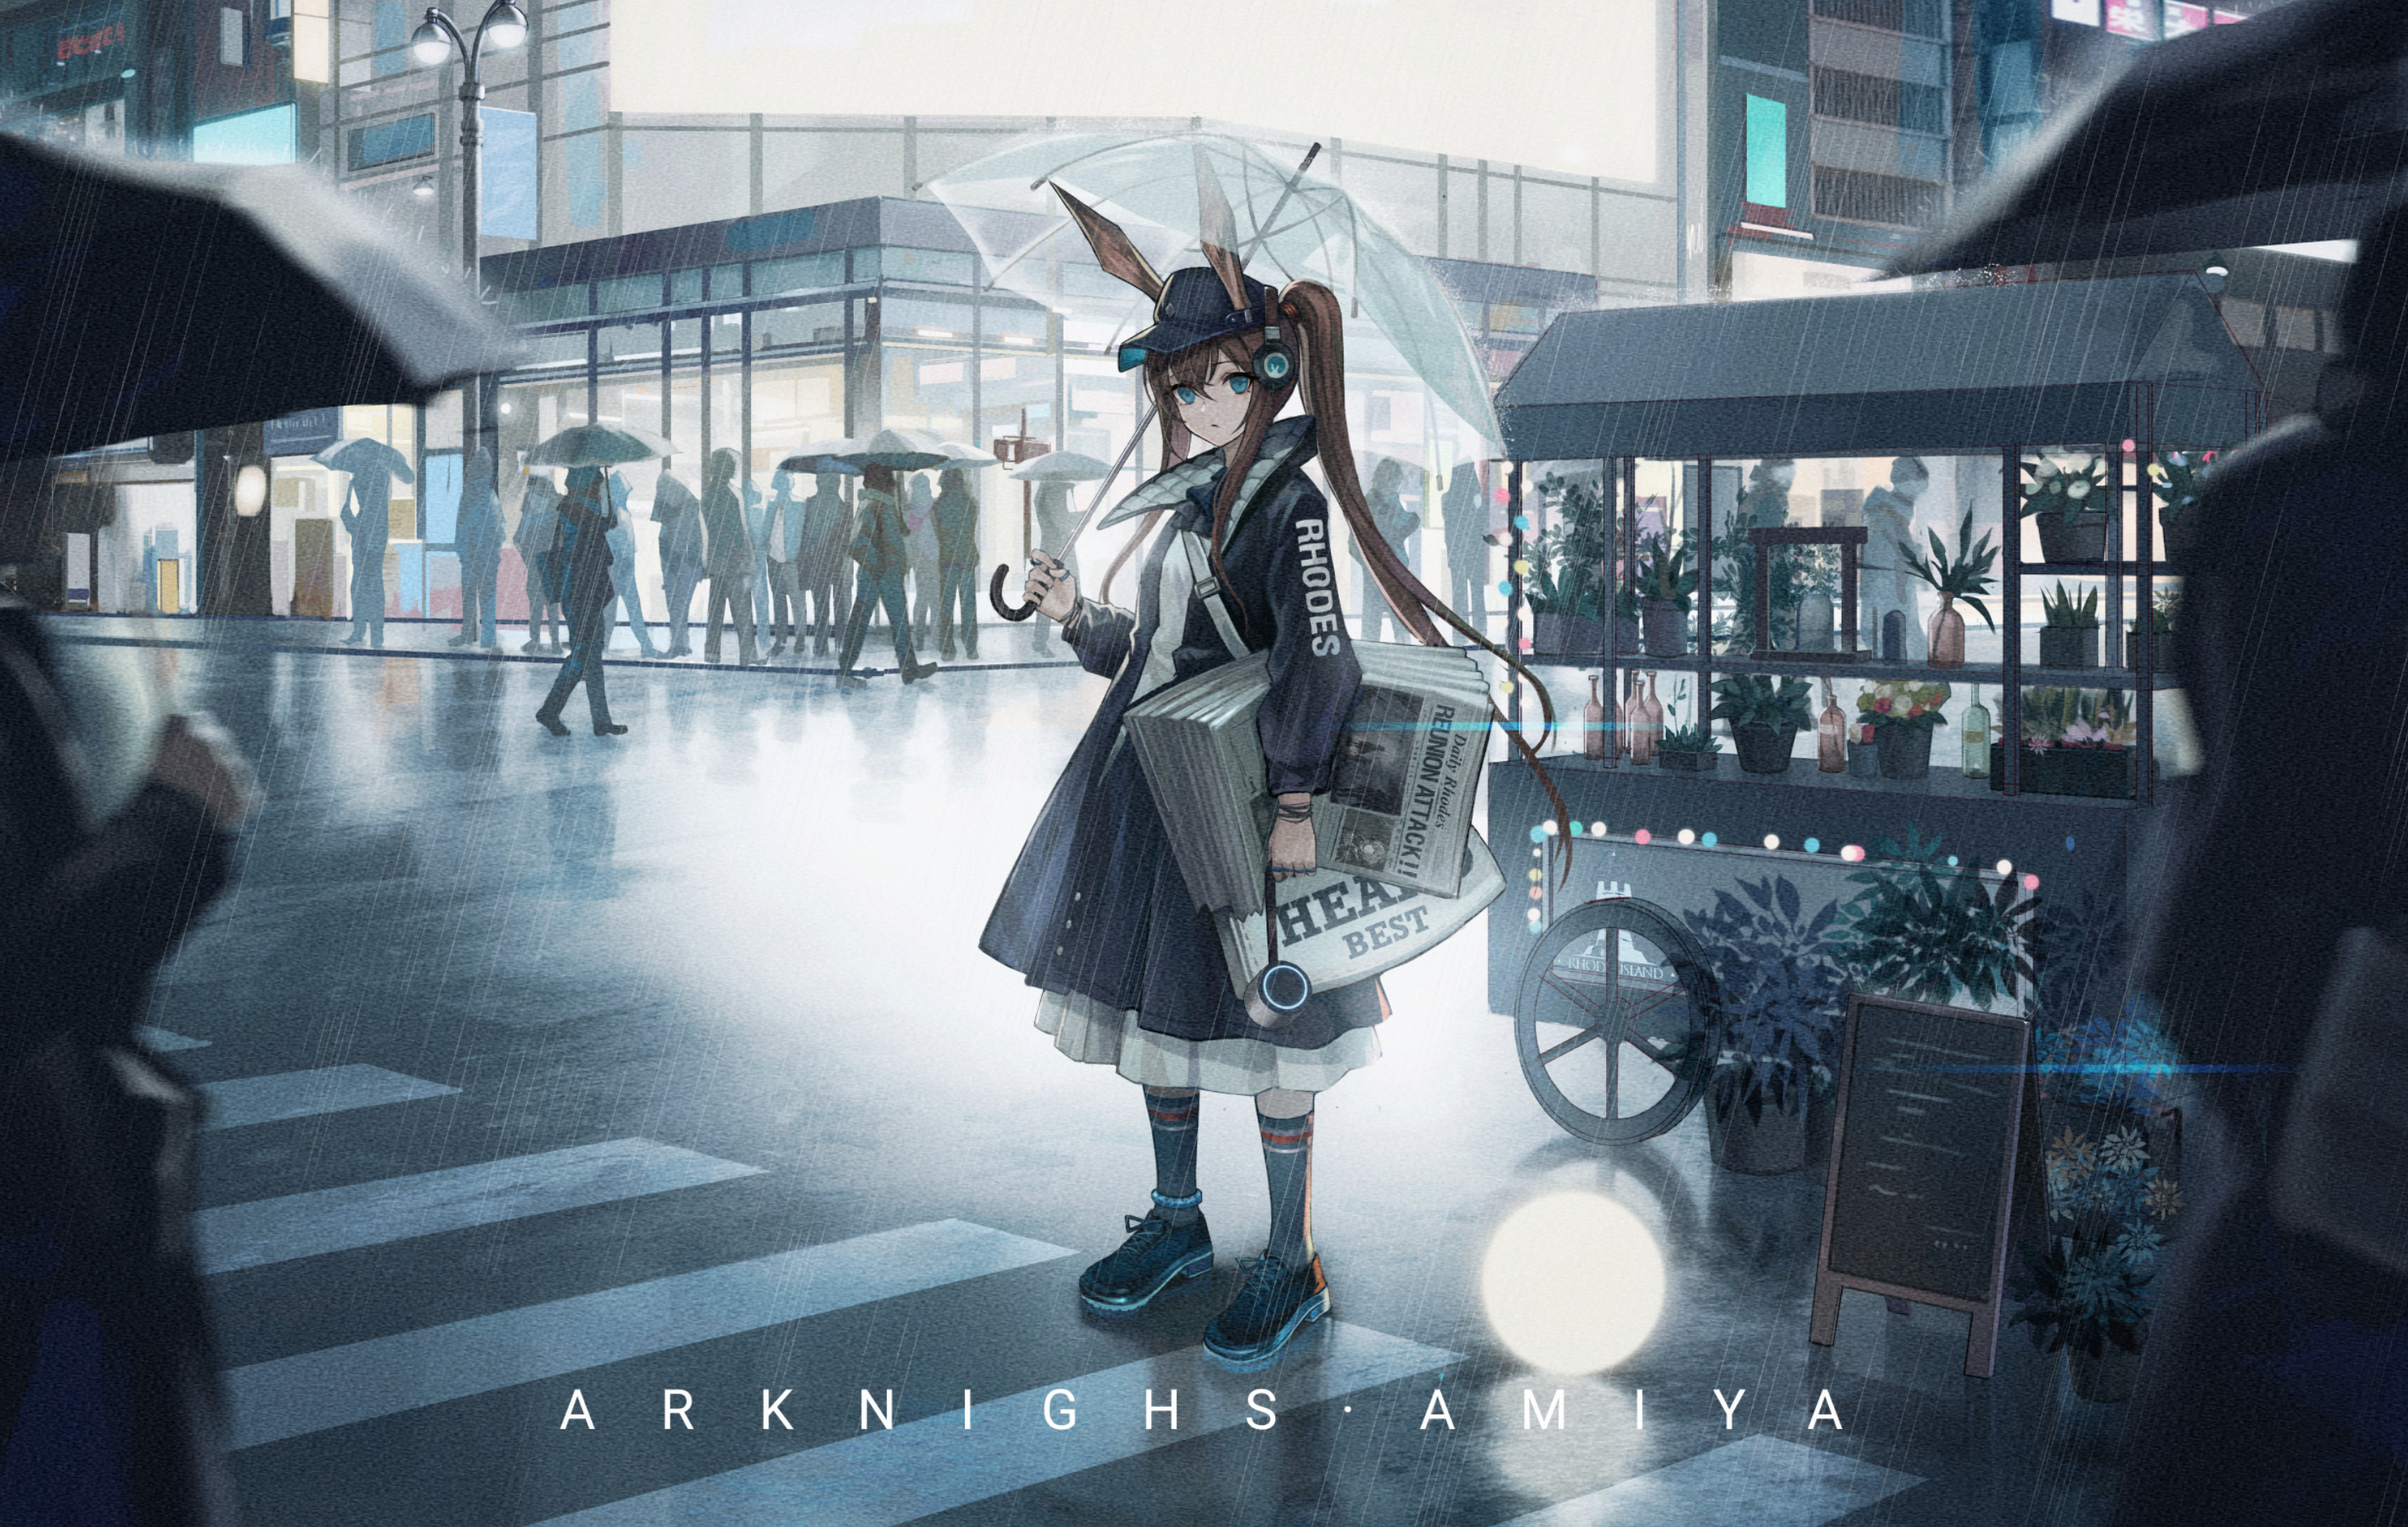 Anime 3027x1920 anime anime girls digital art artwork 2D portrait Arknights Amiya (Arknights) newspapers rain umbrella animal ears bunny girl brunette